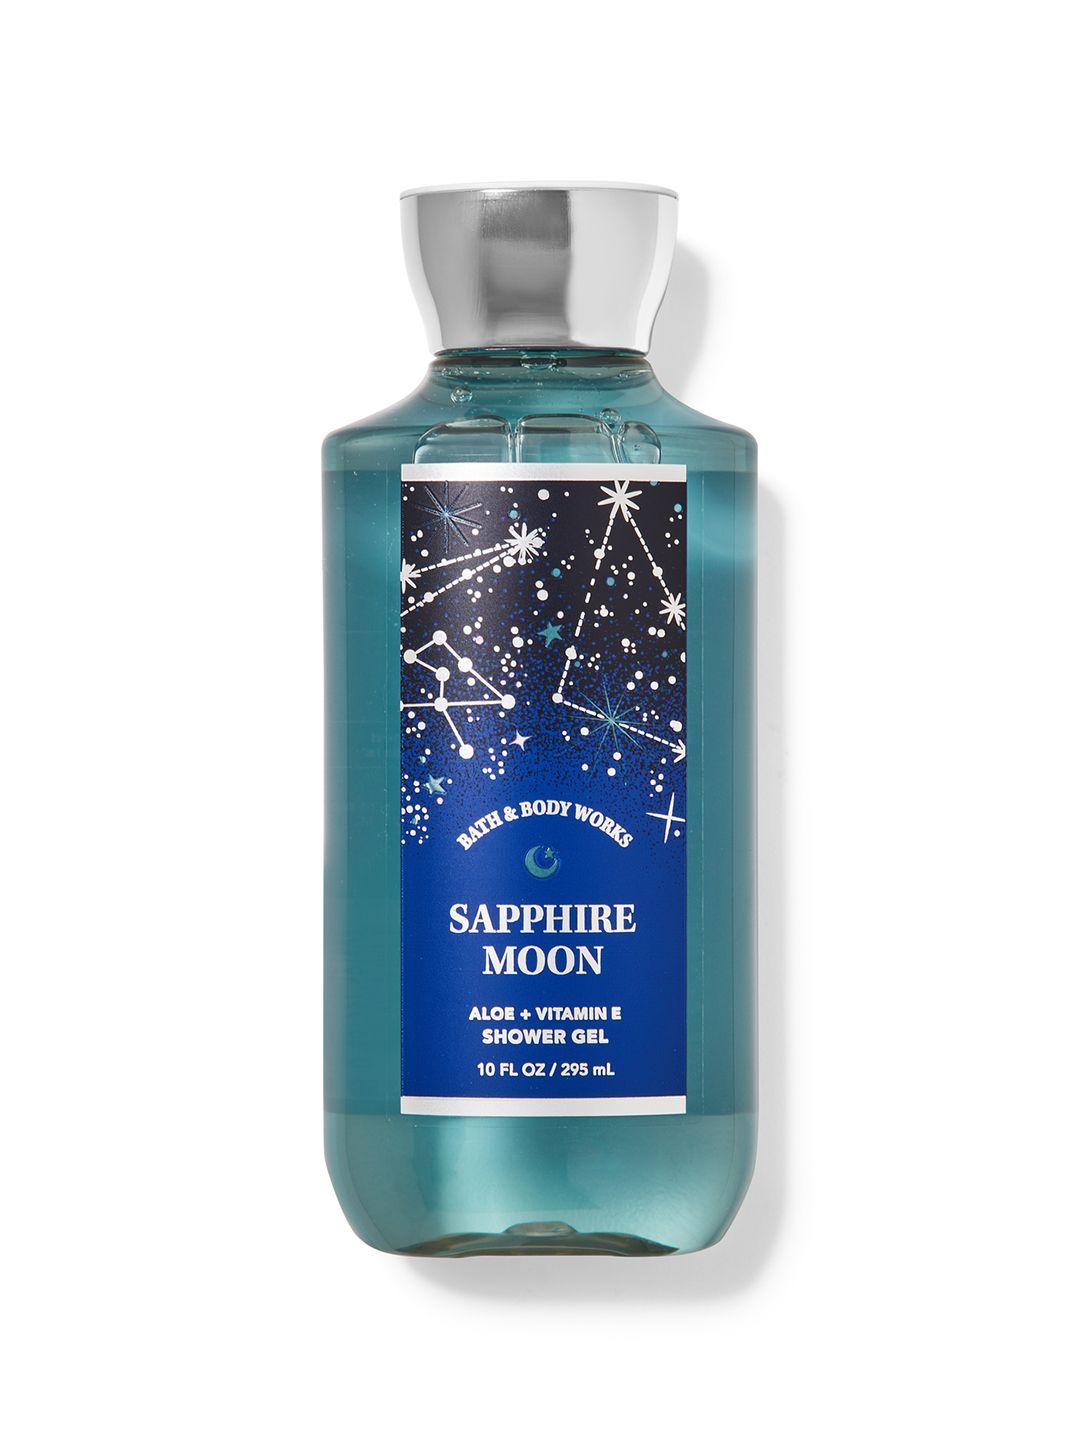 bath & body works sapphire moon shower gel with vitamin e & aloe vera - 295 ml